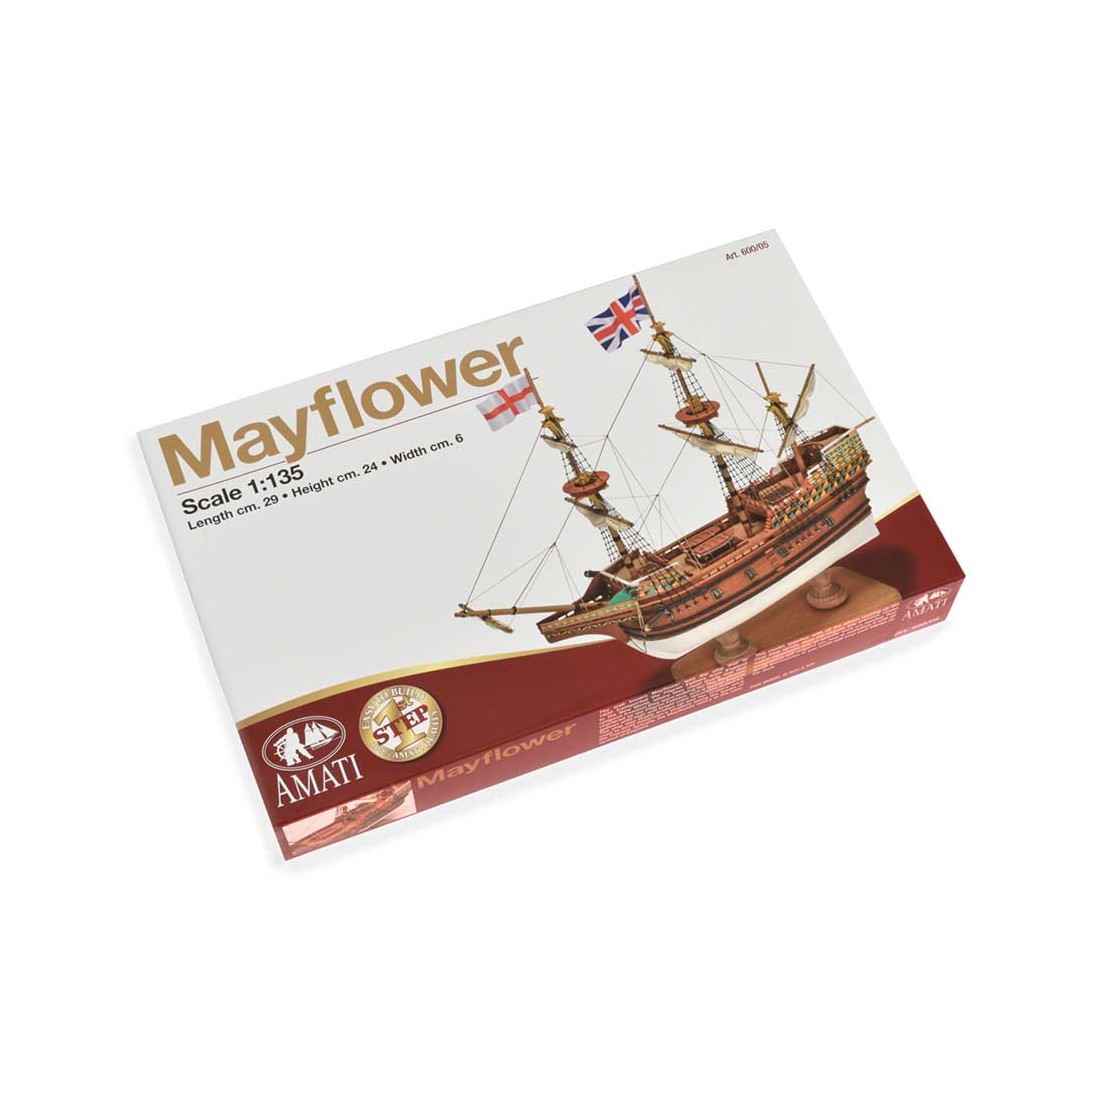 Mayflower- First Step